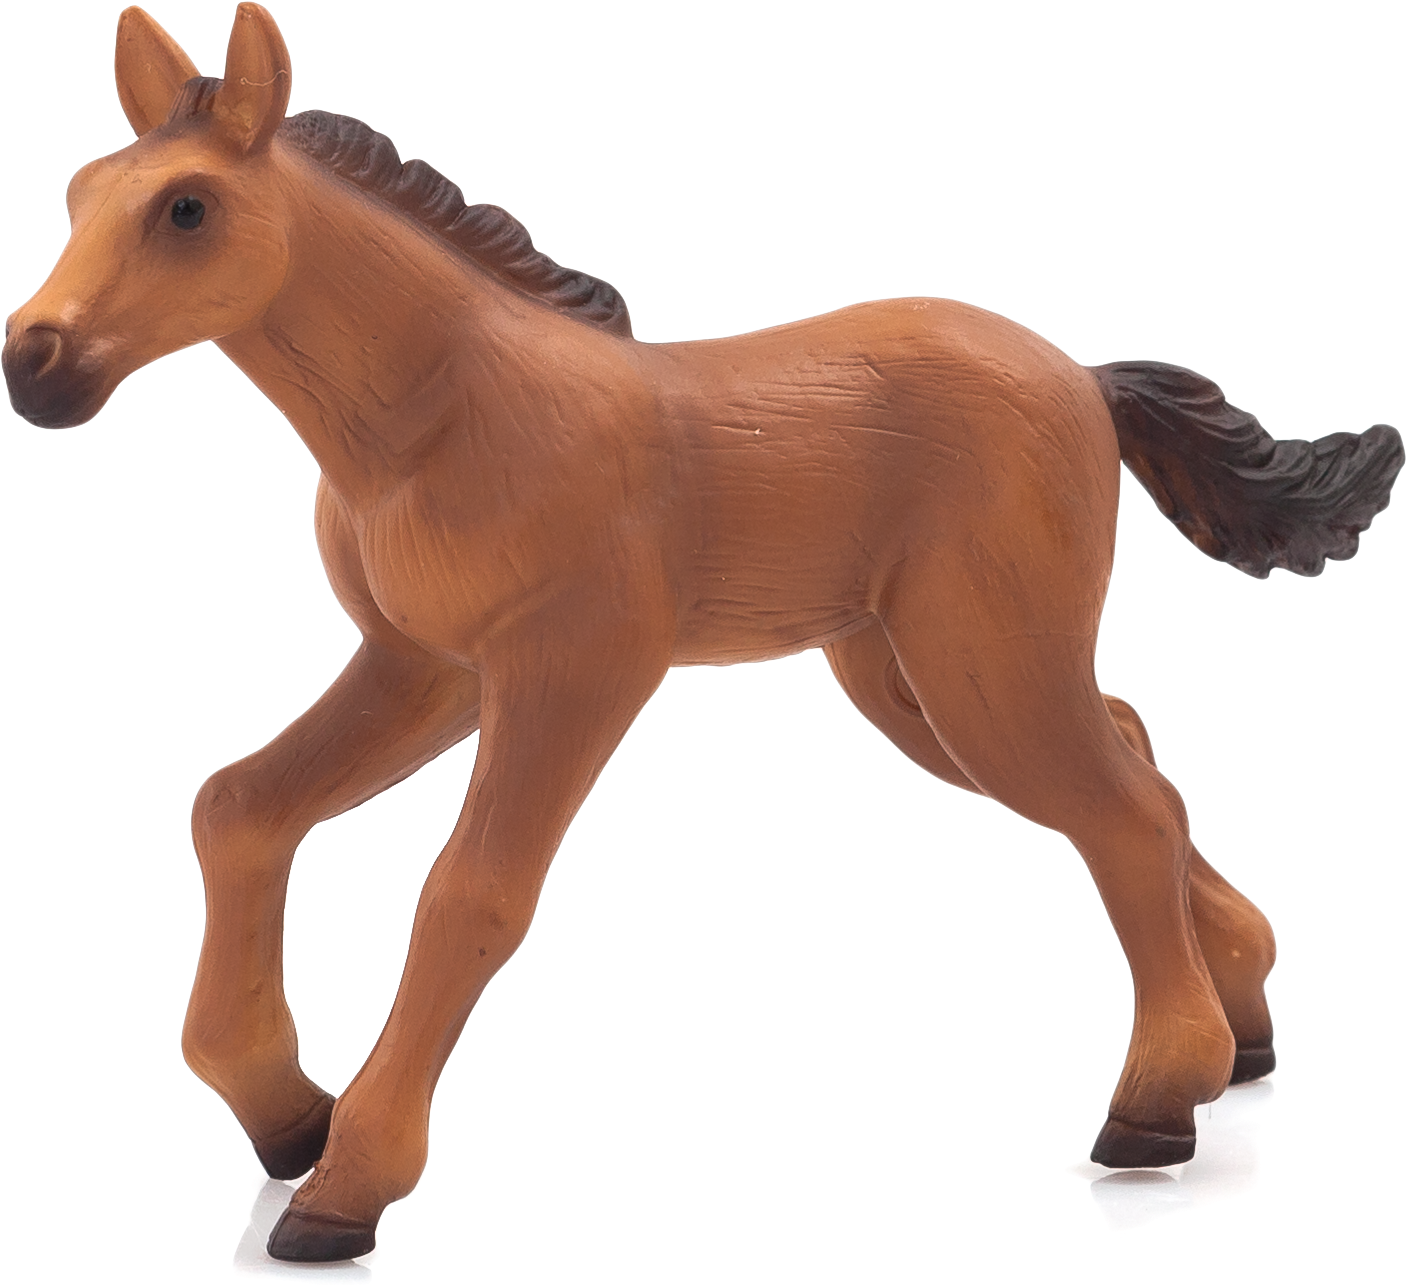 Brown Foal Figurine Image PNG image